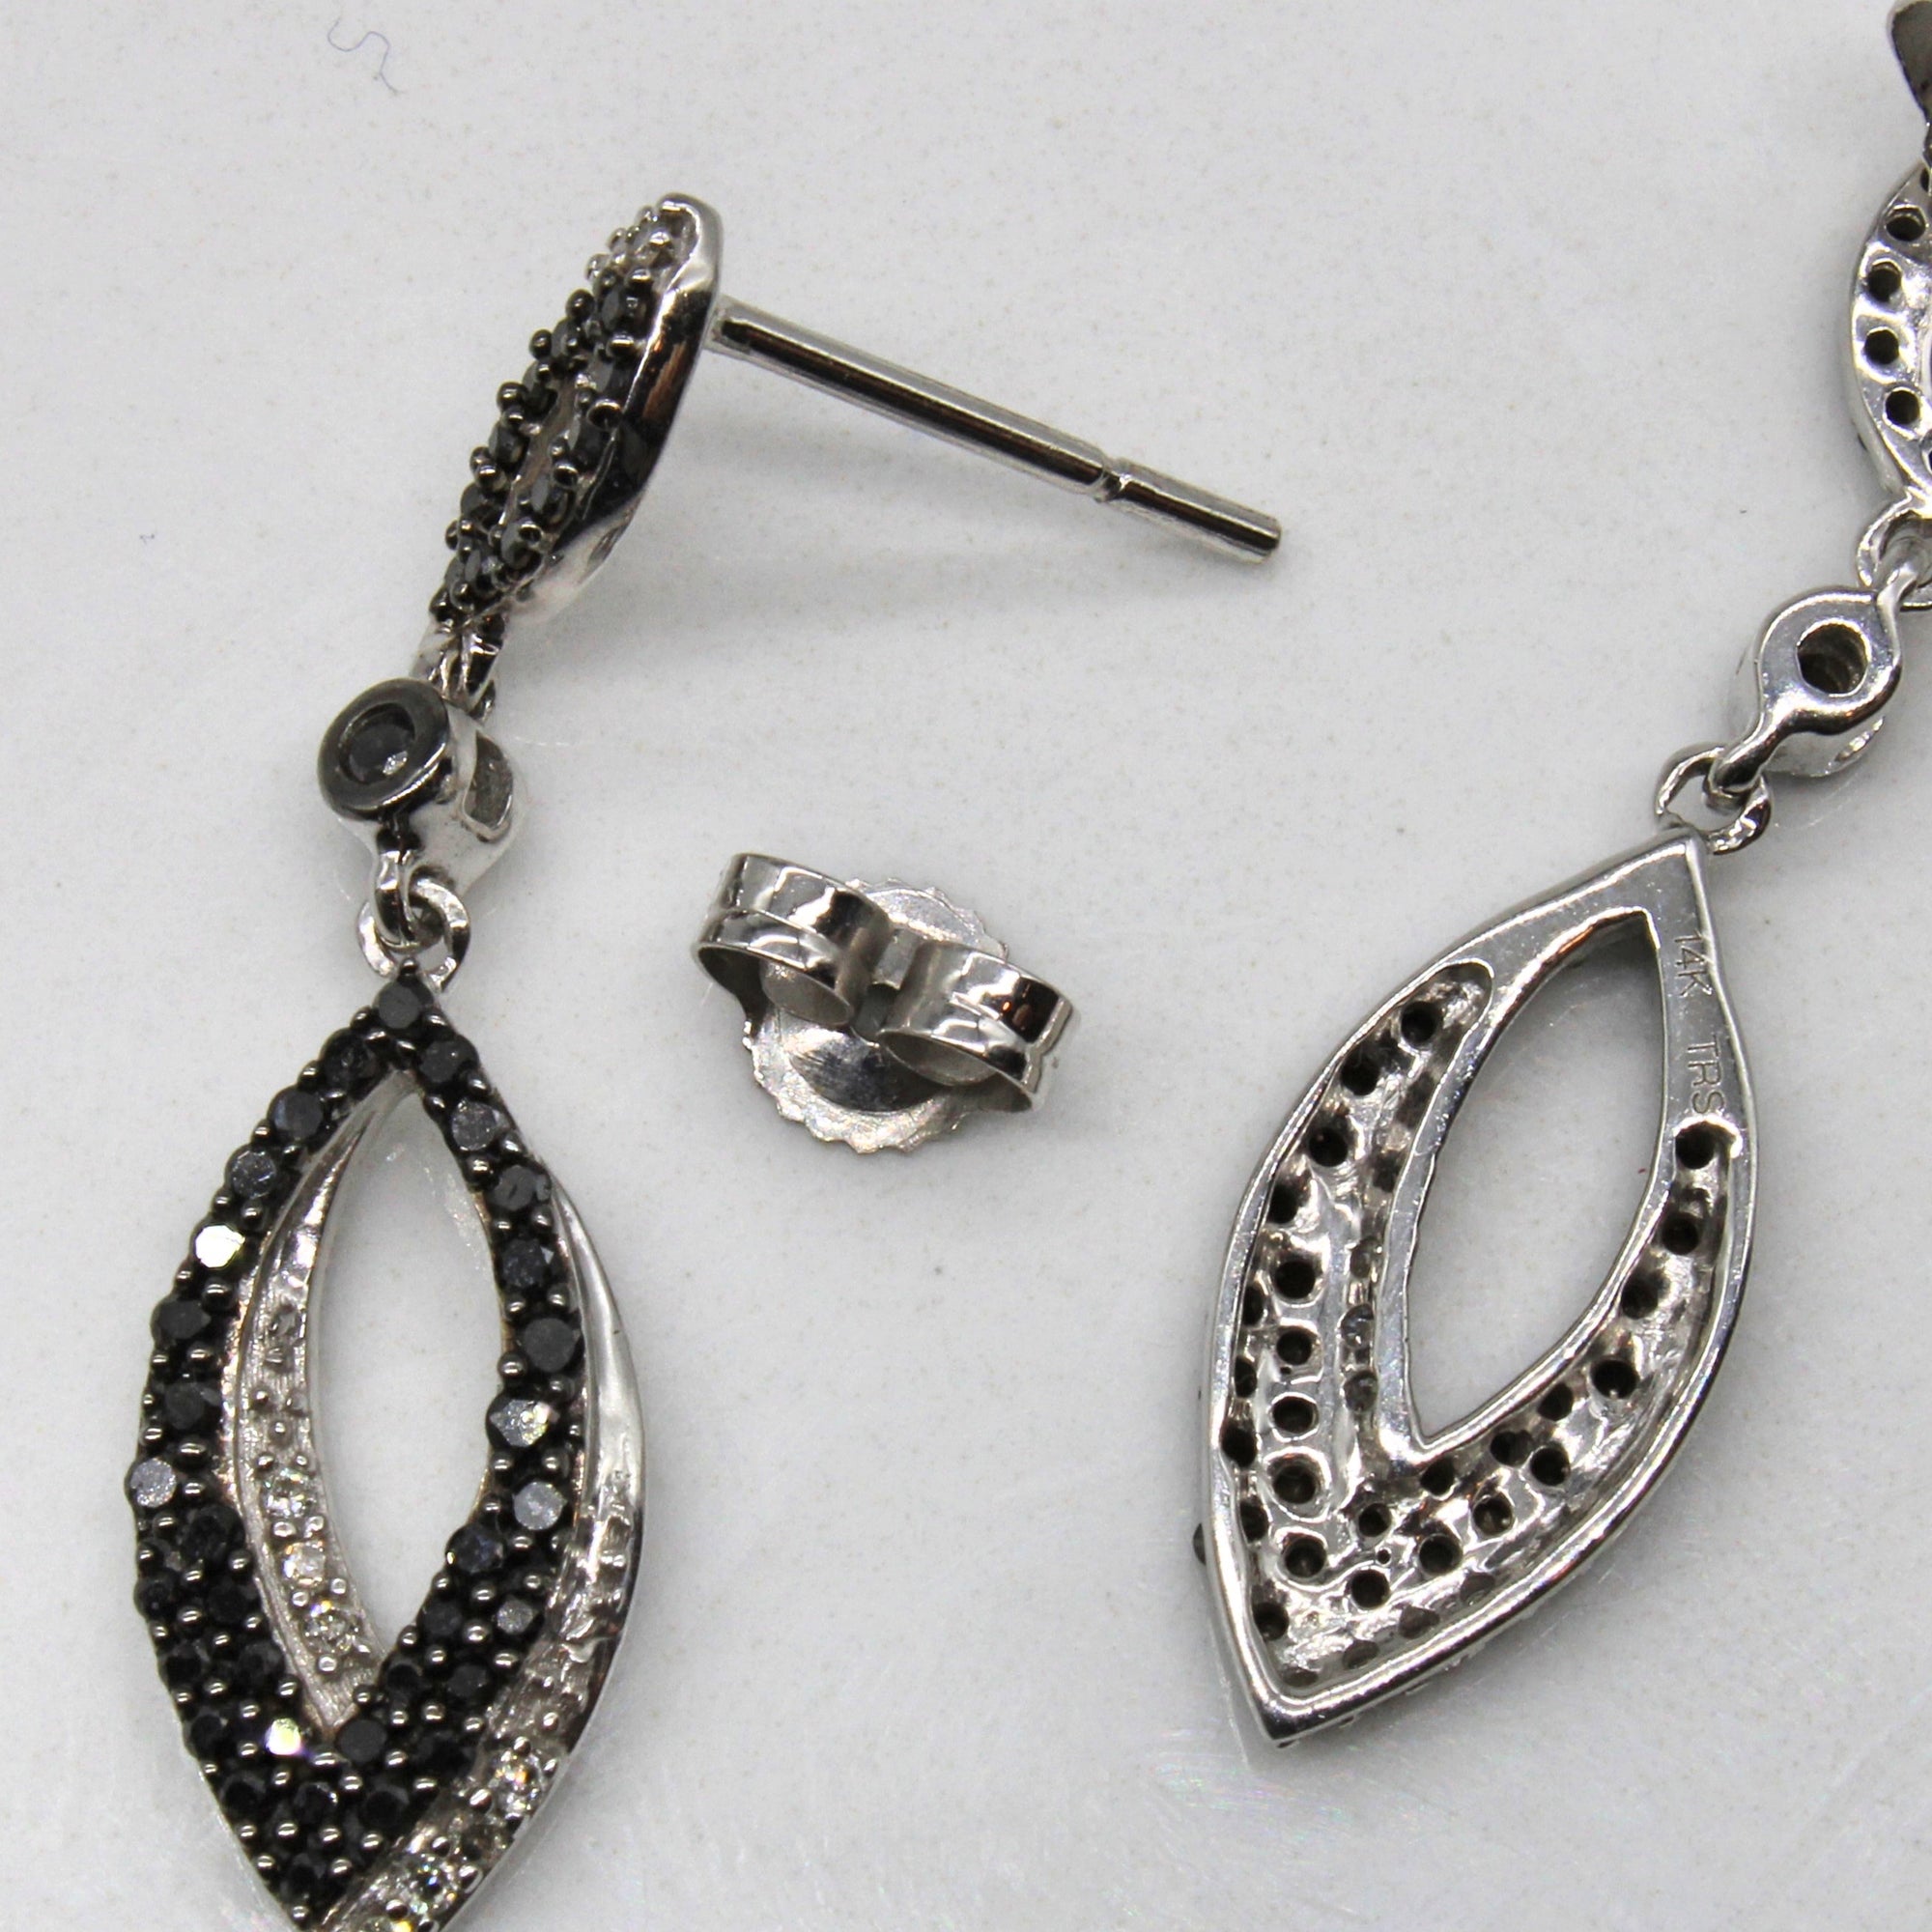 Black & White Diamond Drop Earrings | 0.31ctw |